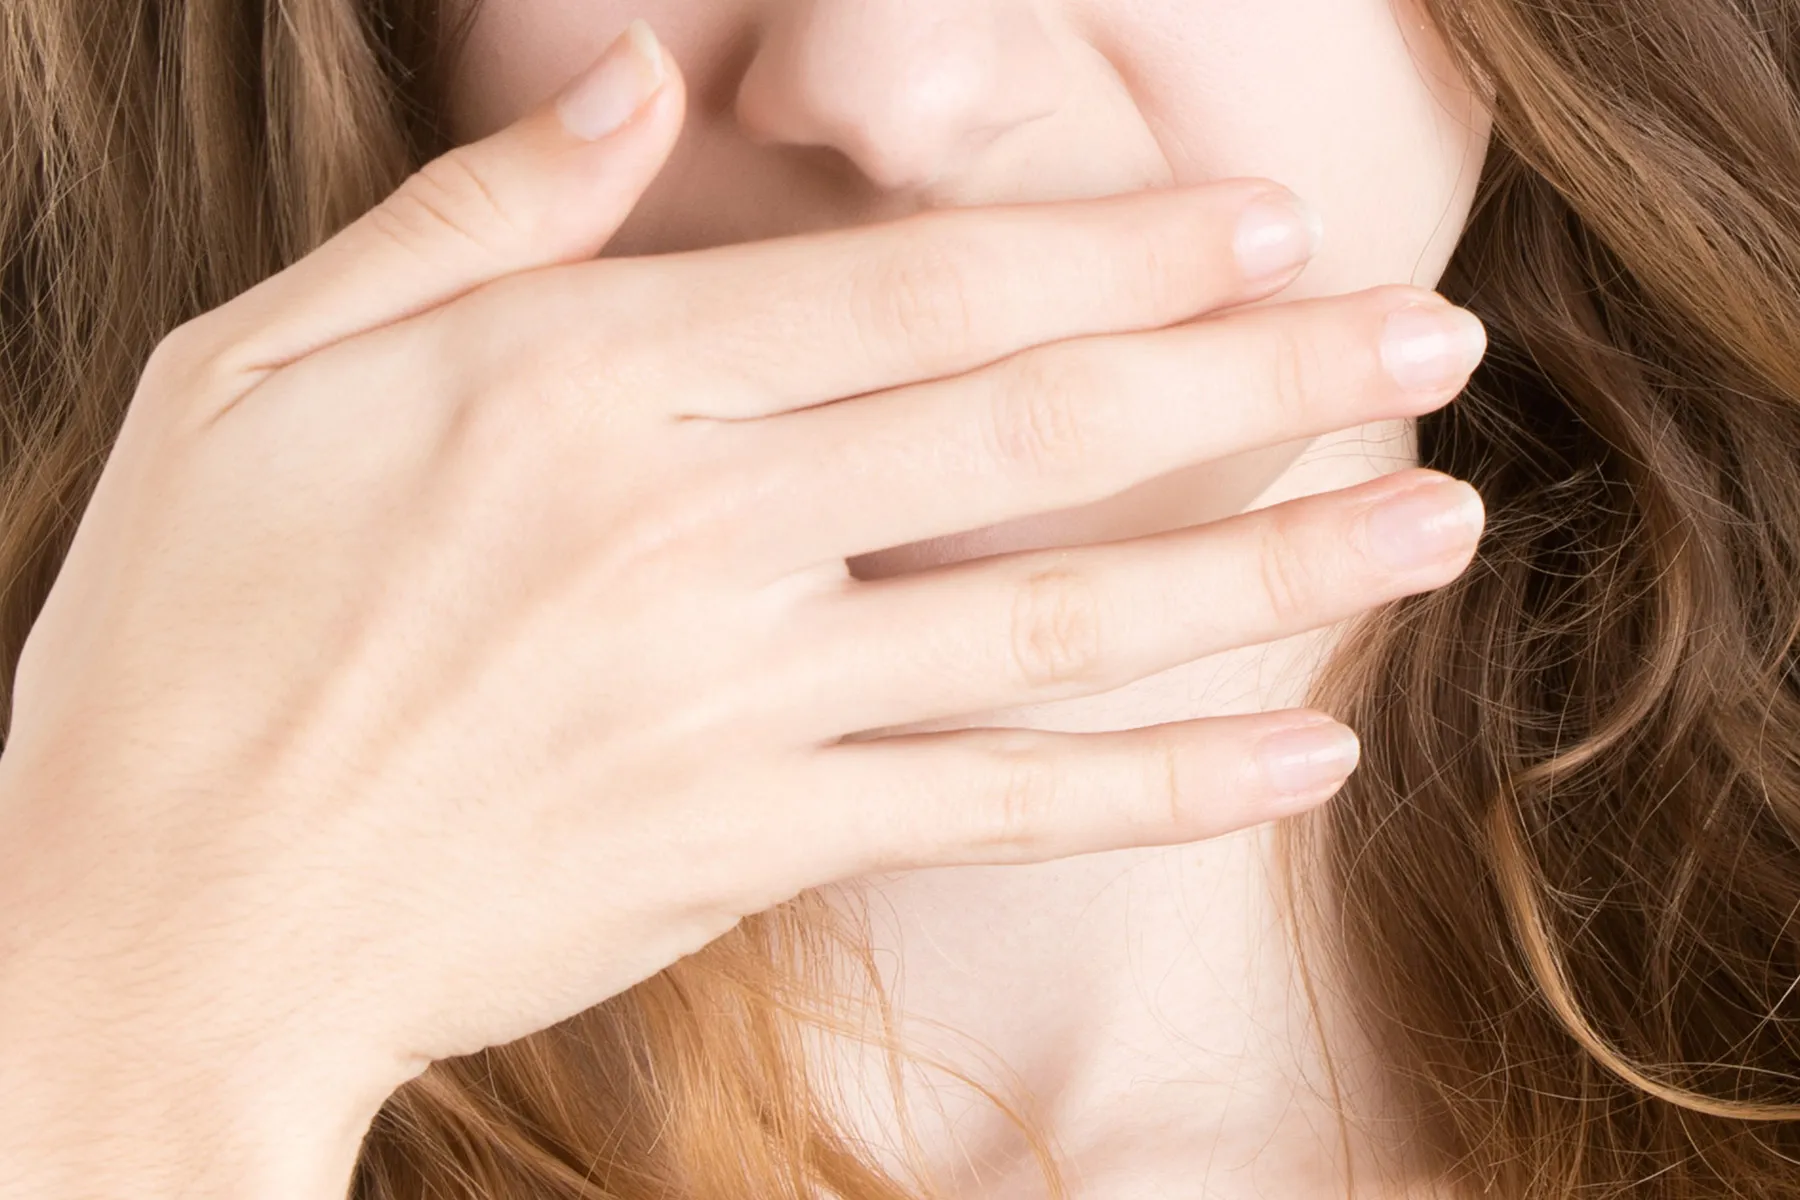 Do I Have Bad Breath? A New Sensor Will Check